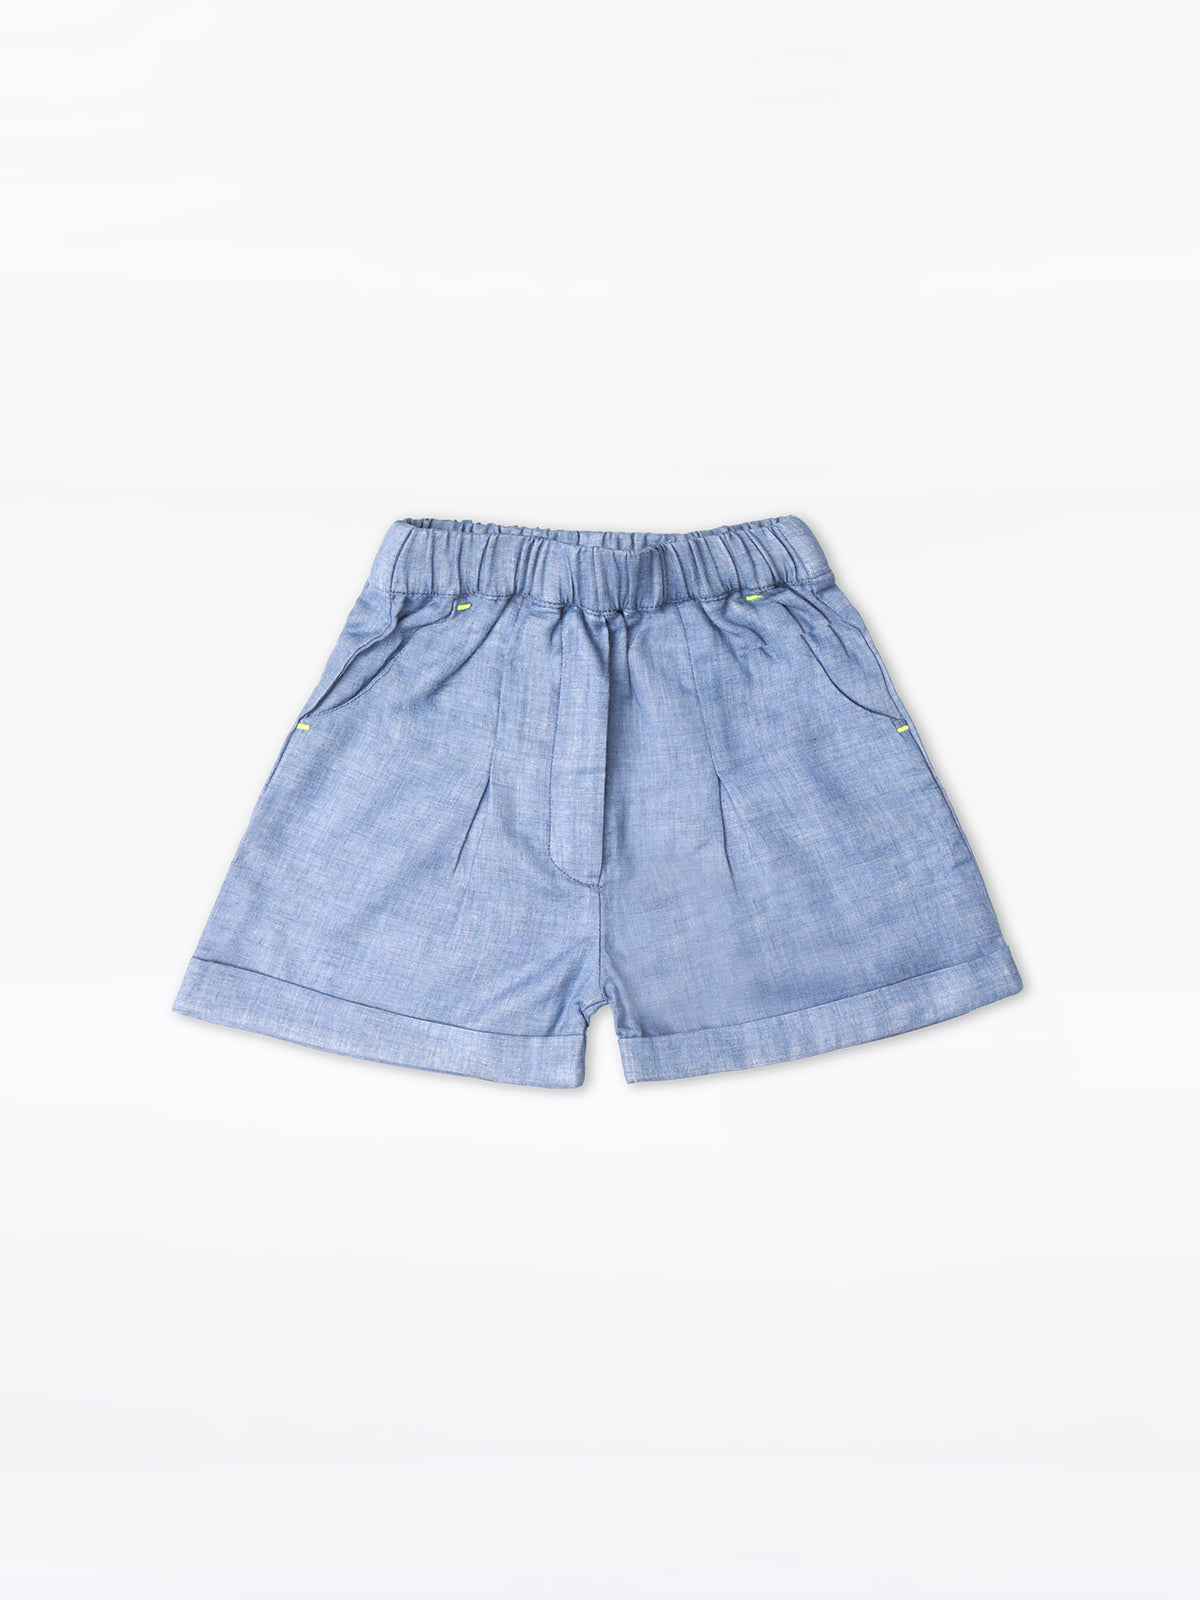 Girl's Blue Shorts - EGBS21-001